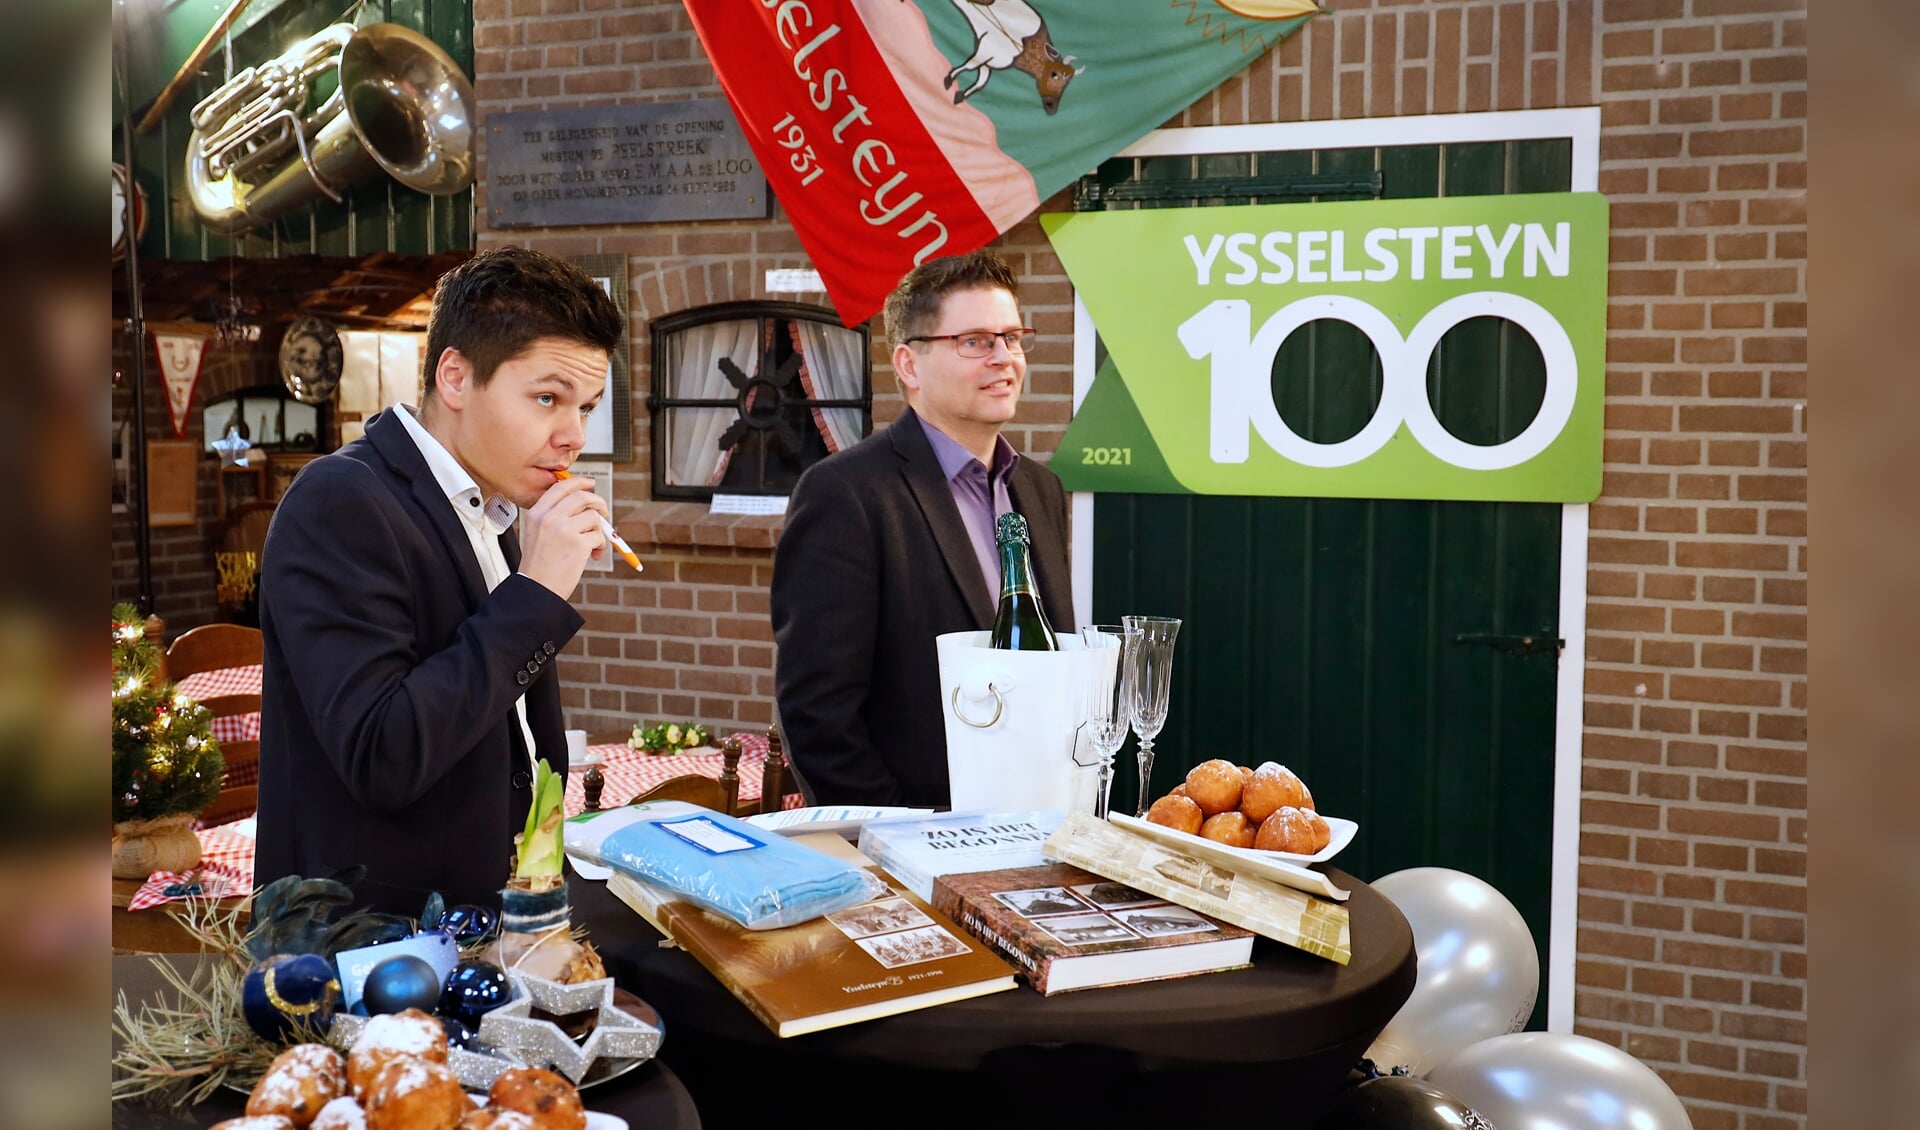 Presentatoren 100 jaar Ysselsteyn vanaf ’t Lovinckplein. Links: Willy Hubers, rechts: Luc Janssen.